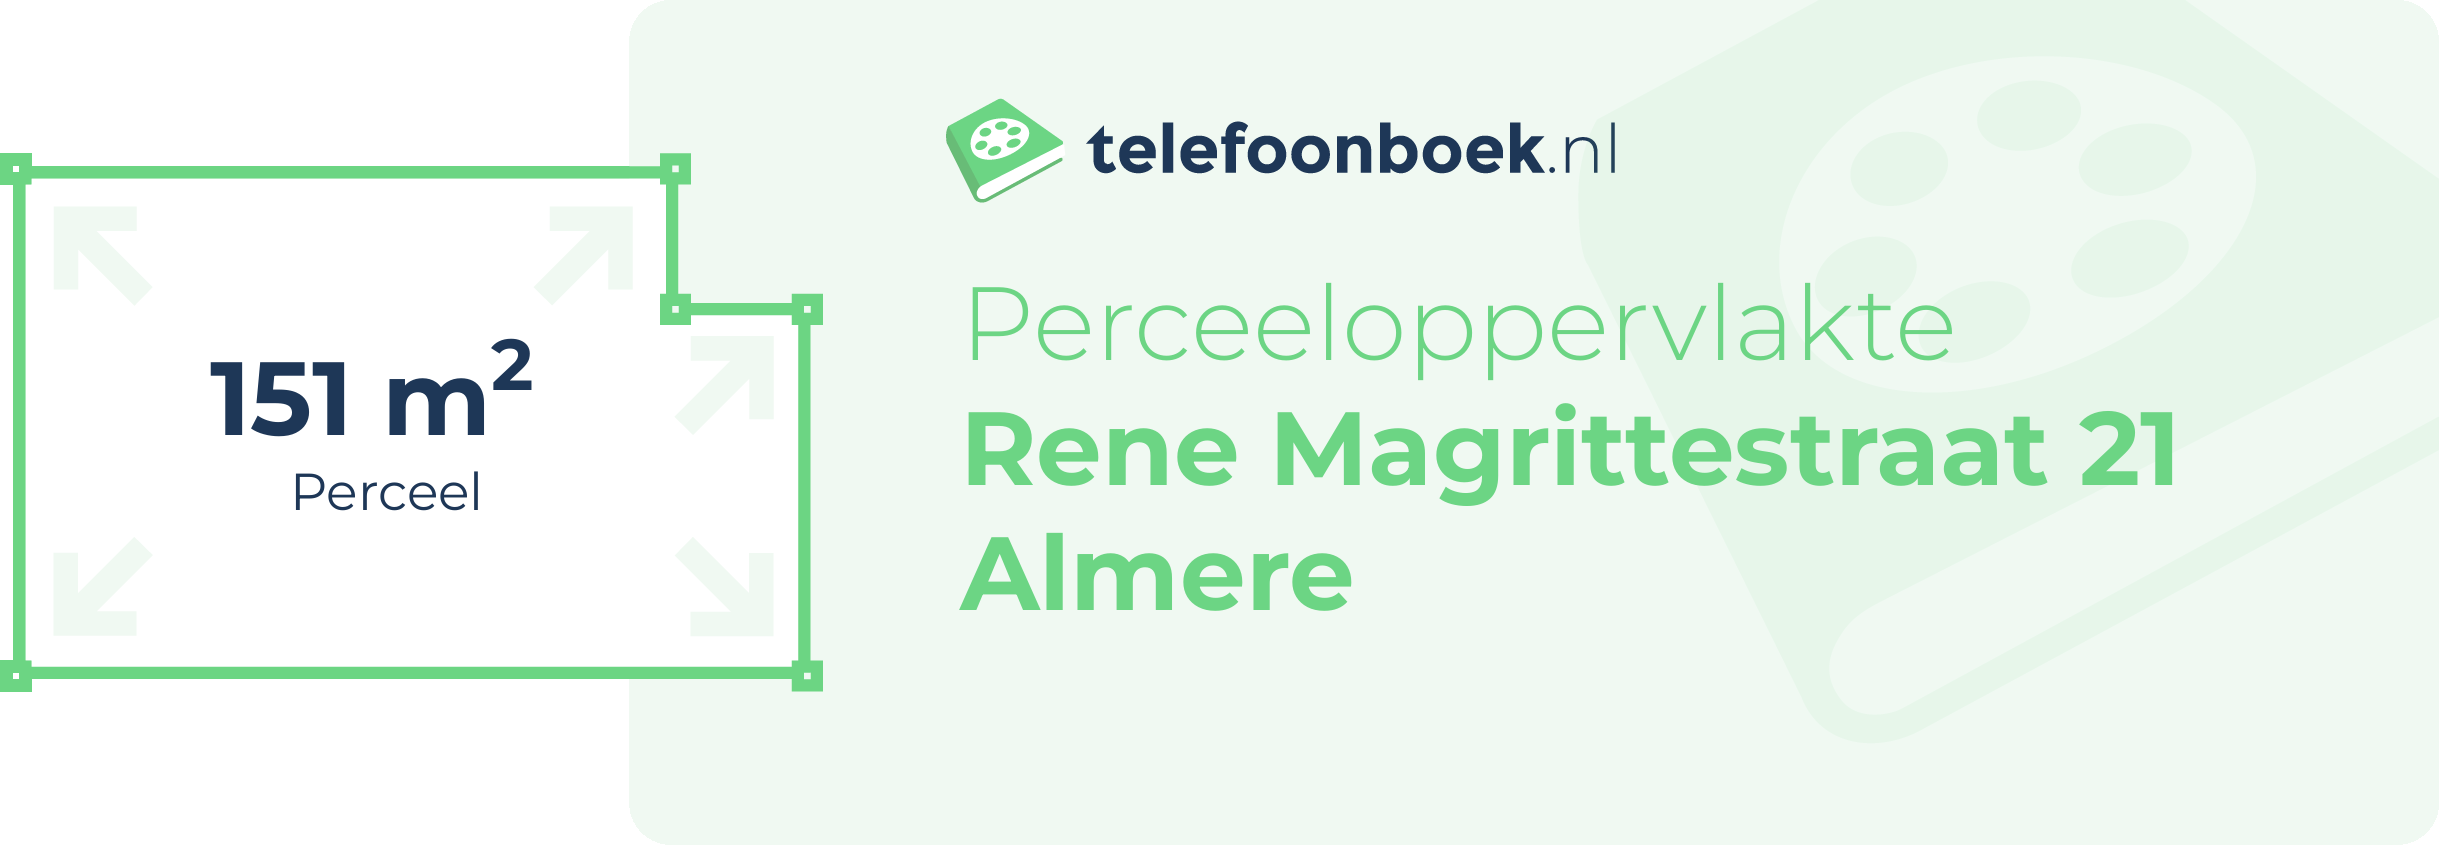 Perceeloppervlakte Rene Magrittestraat 21 Almere